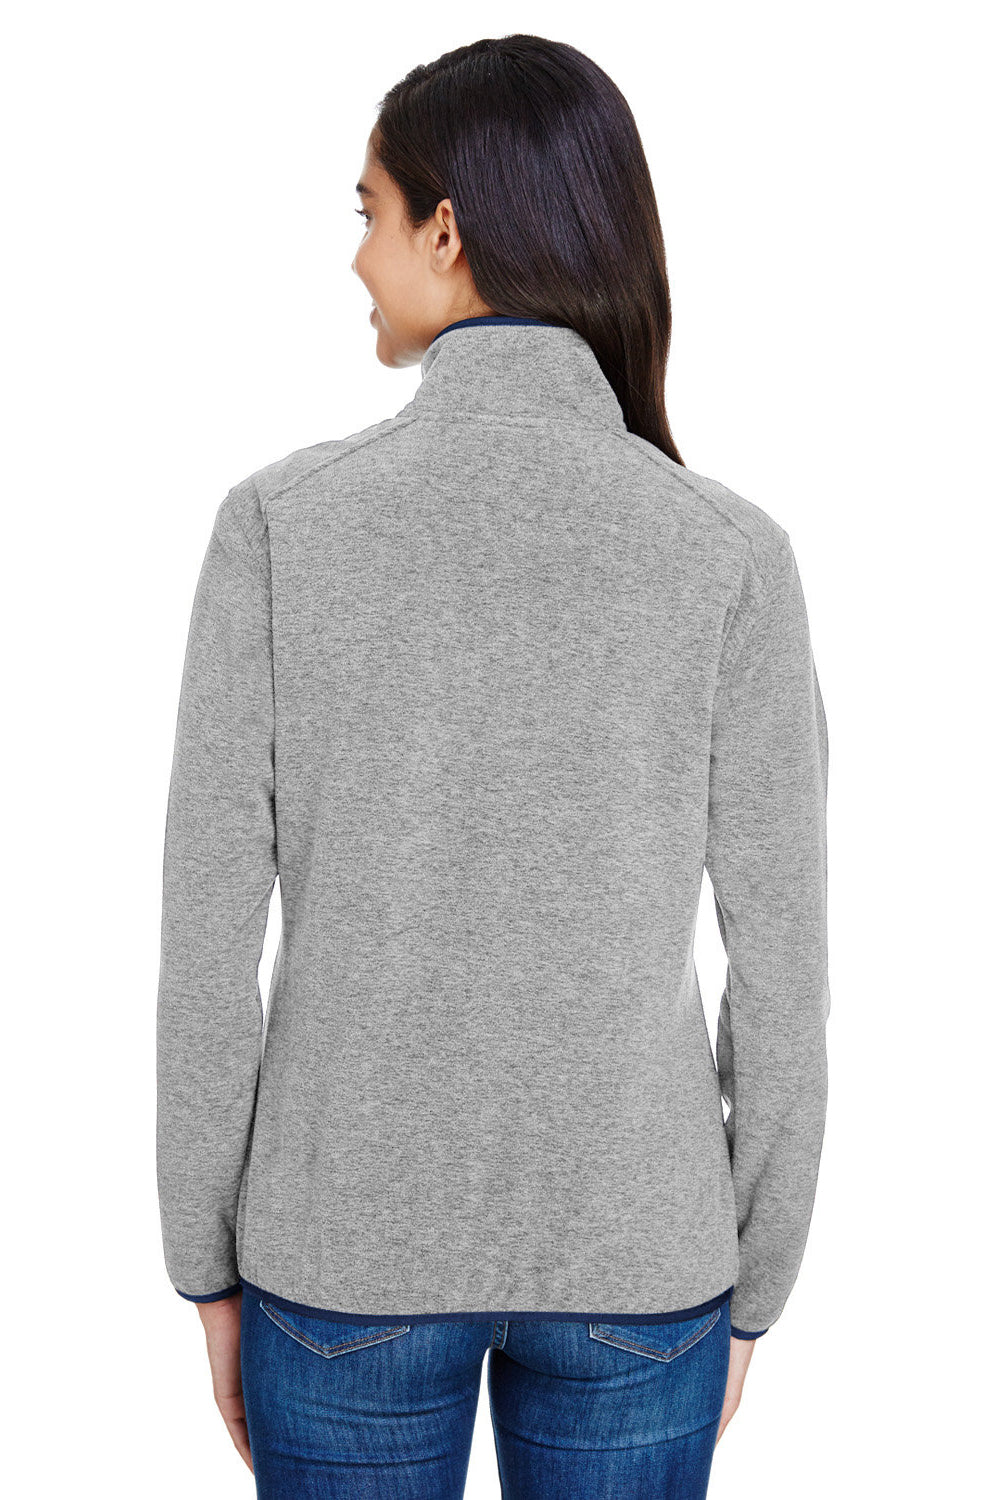 Dri Duck 9340 Mens Denali Mountain Fleece Sweatshirt Platinum Grey Model Back